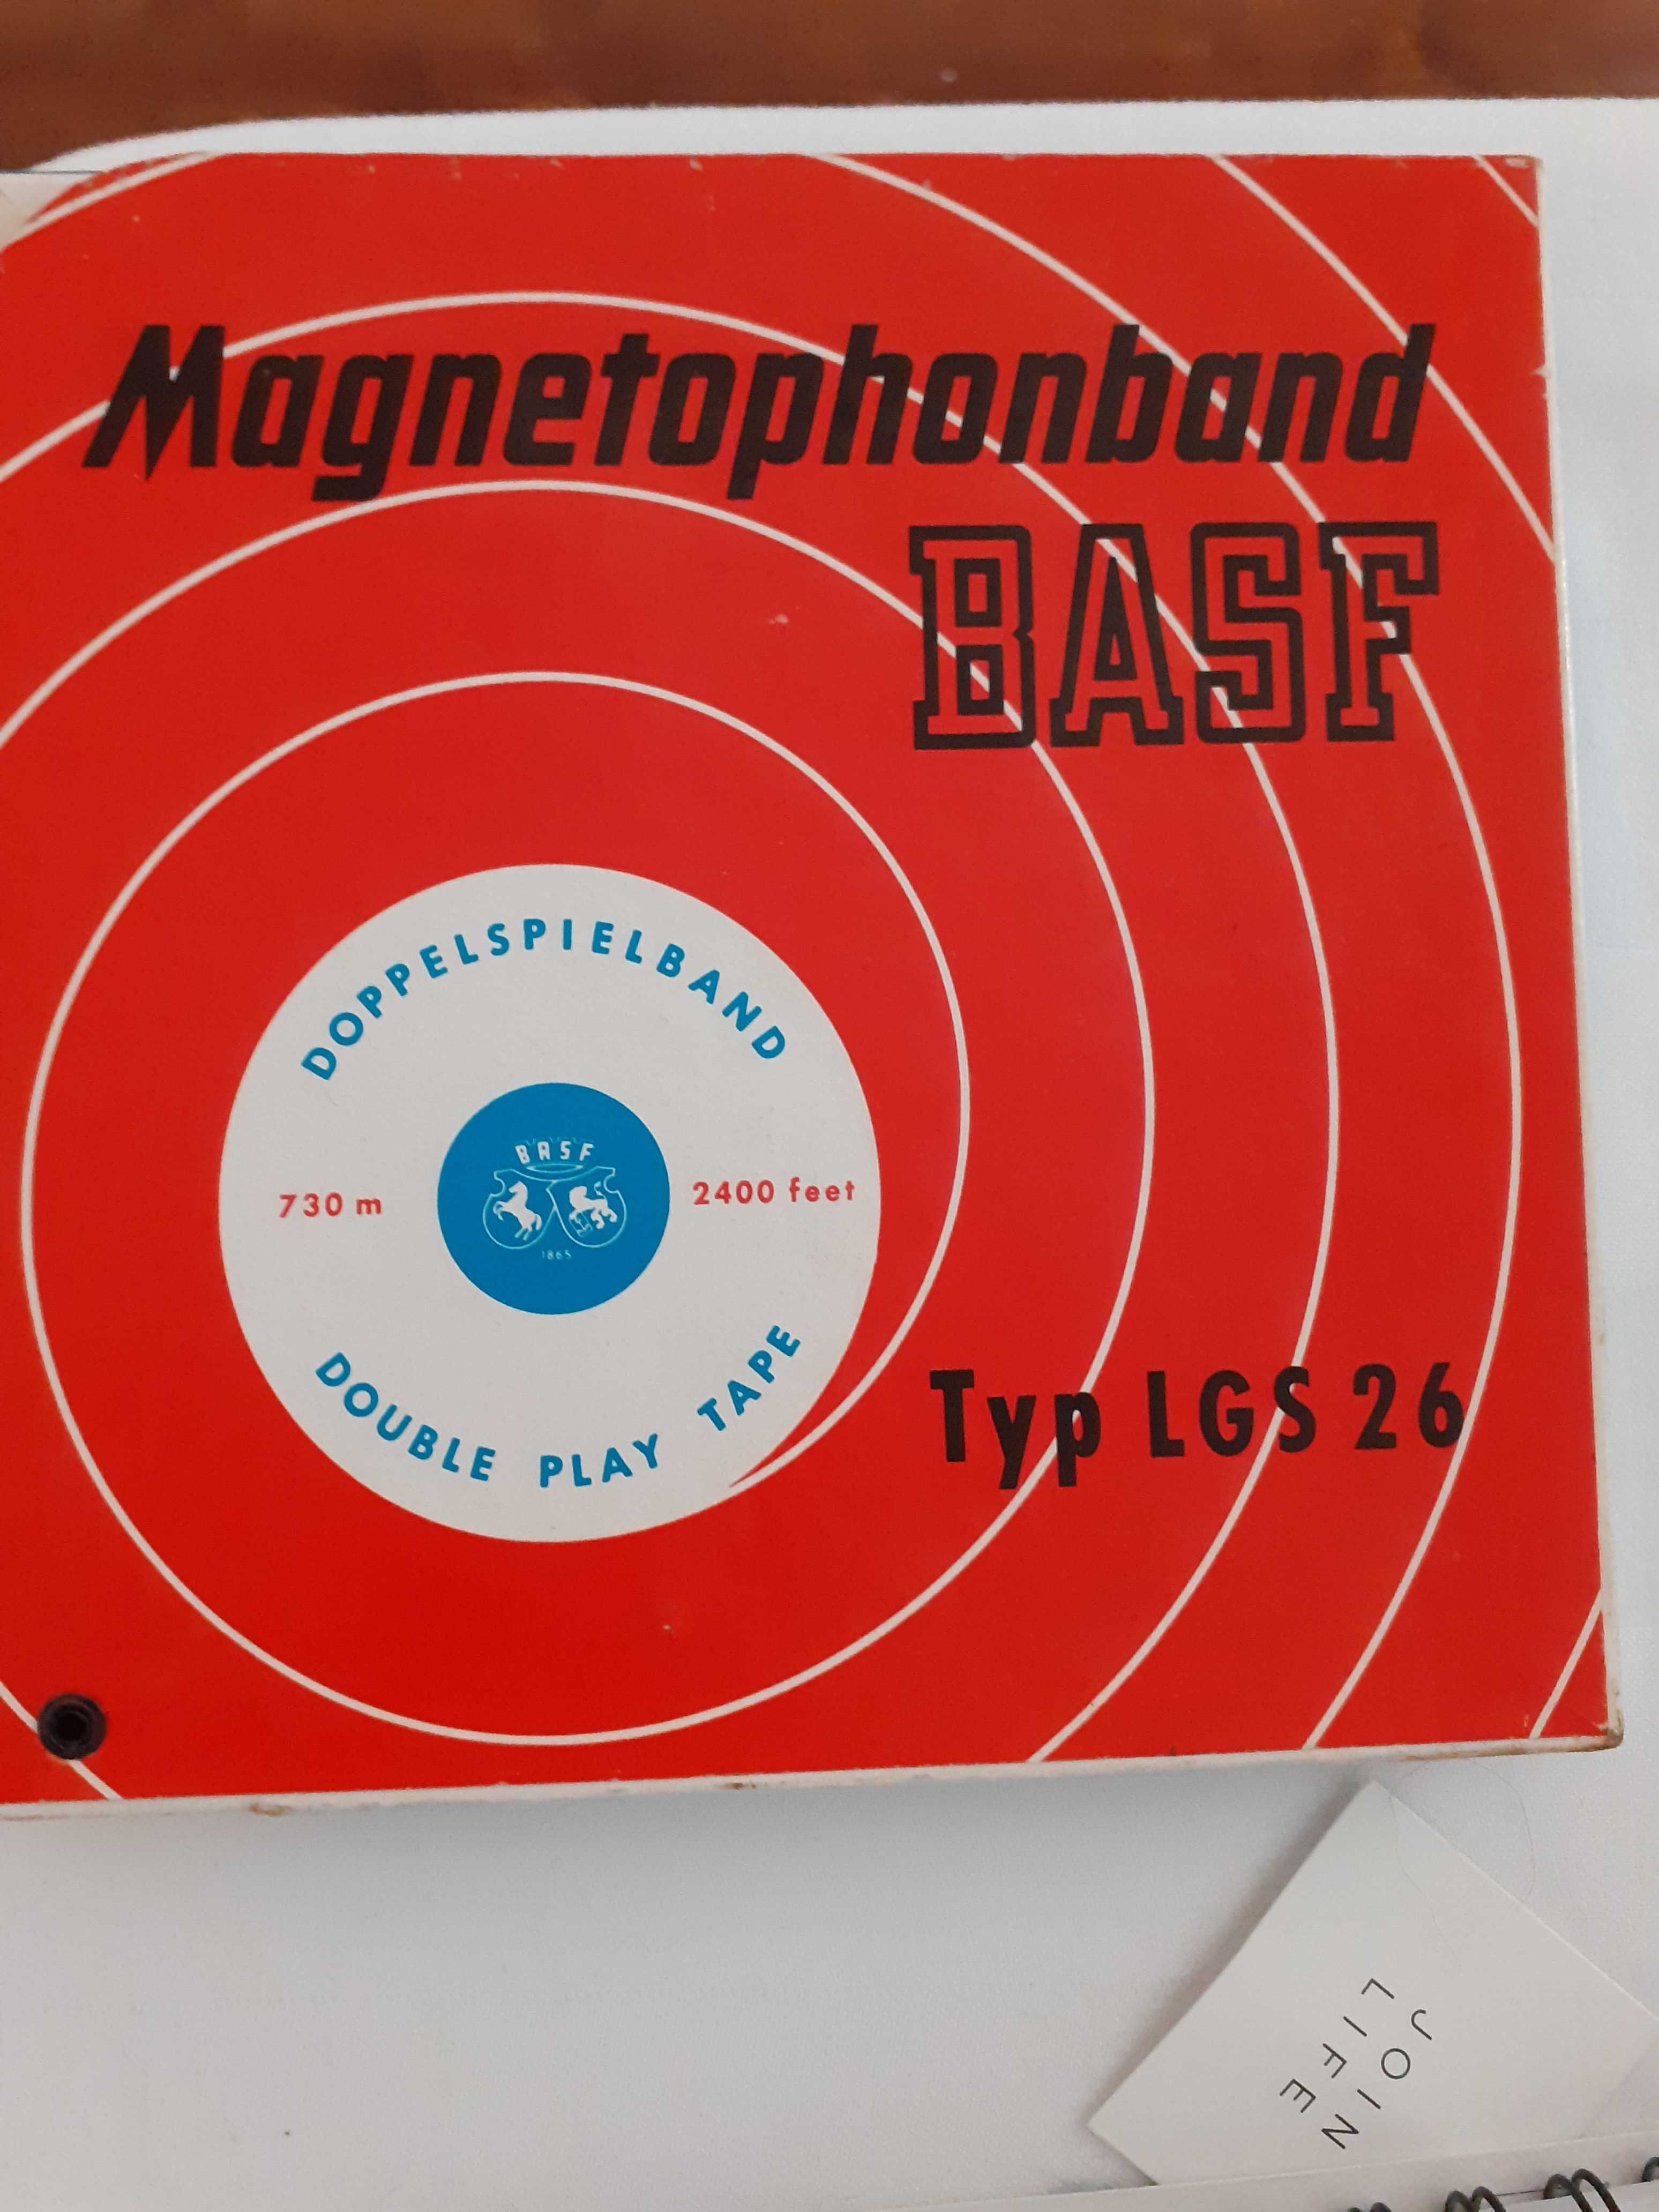 magnetophone band basf Typ lgs 26